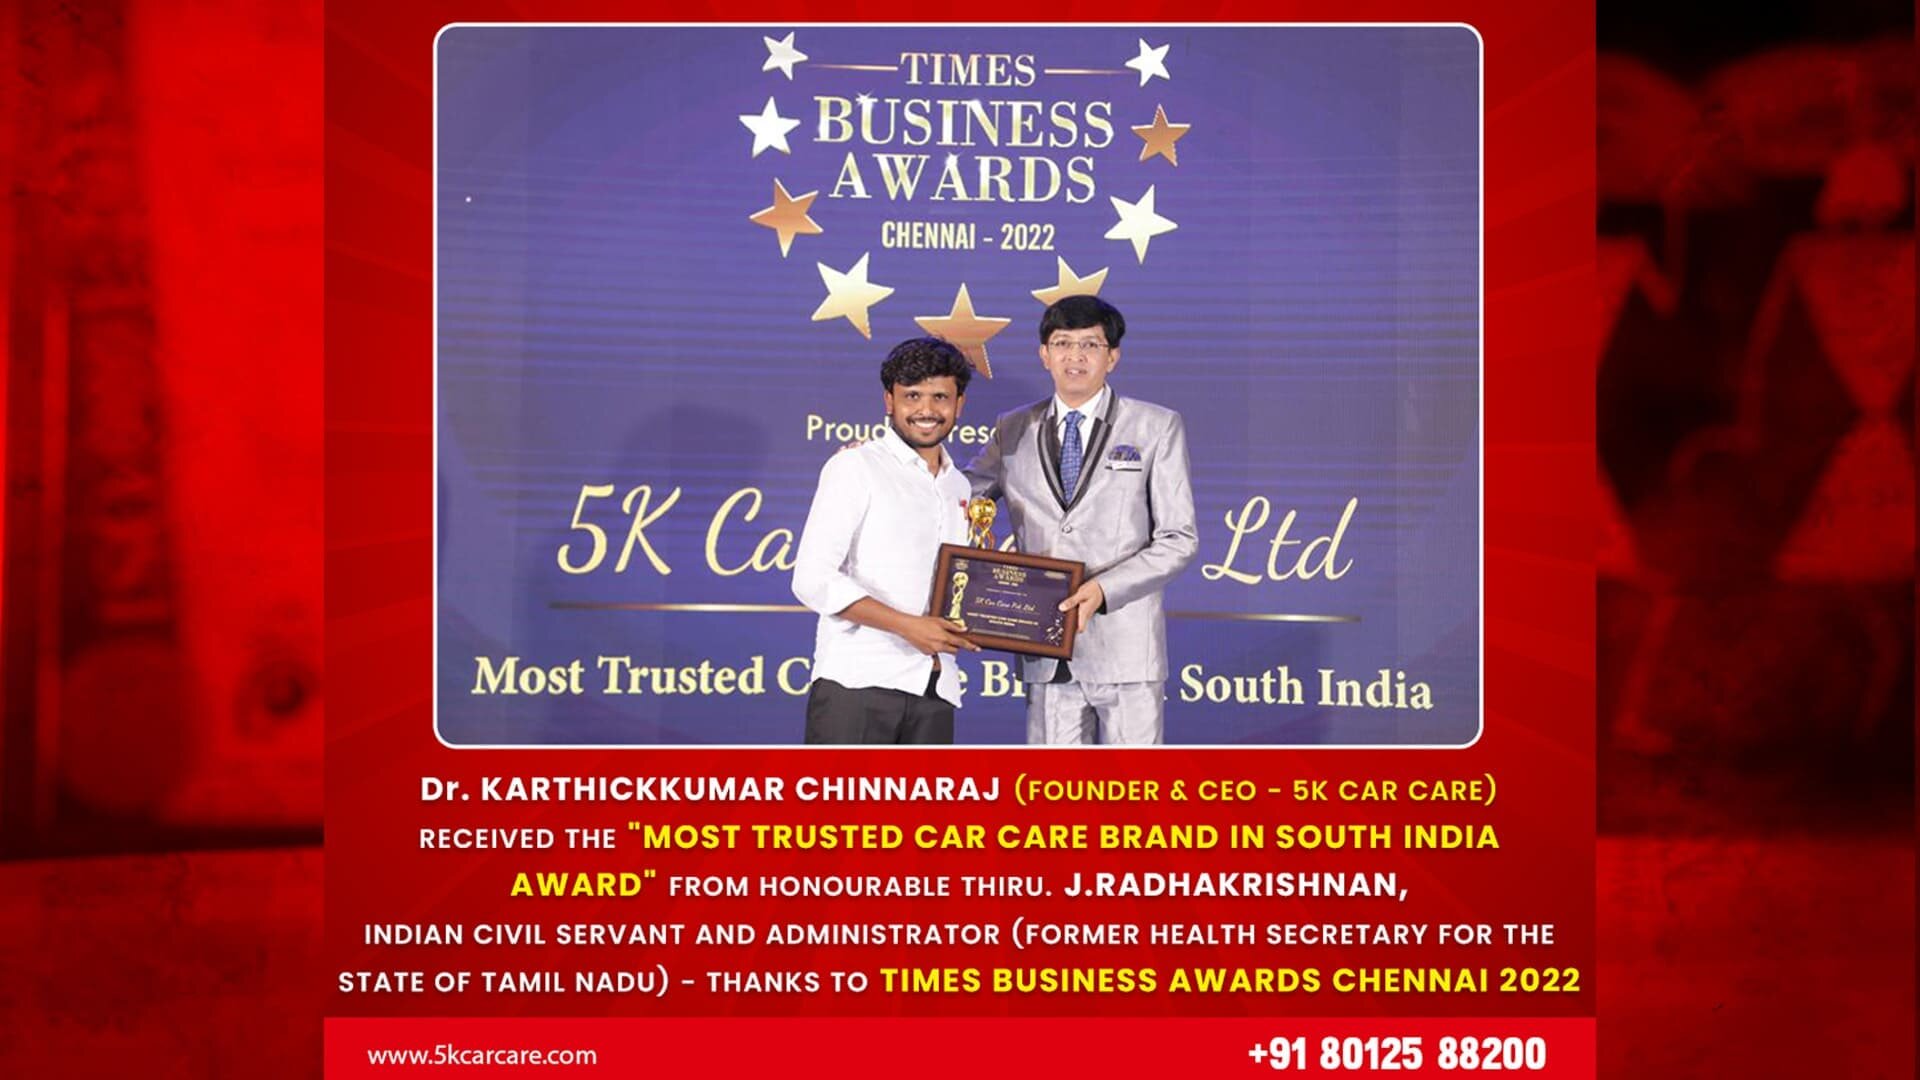 Times Business Awards Chennai - 2022